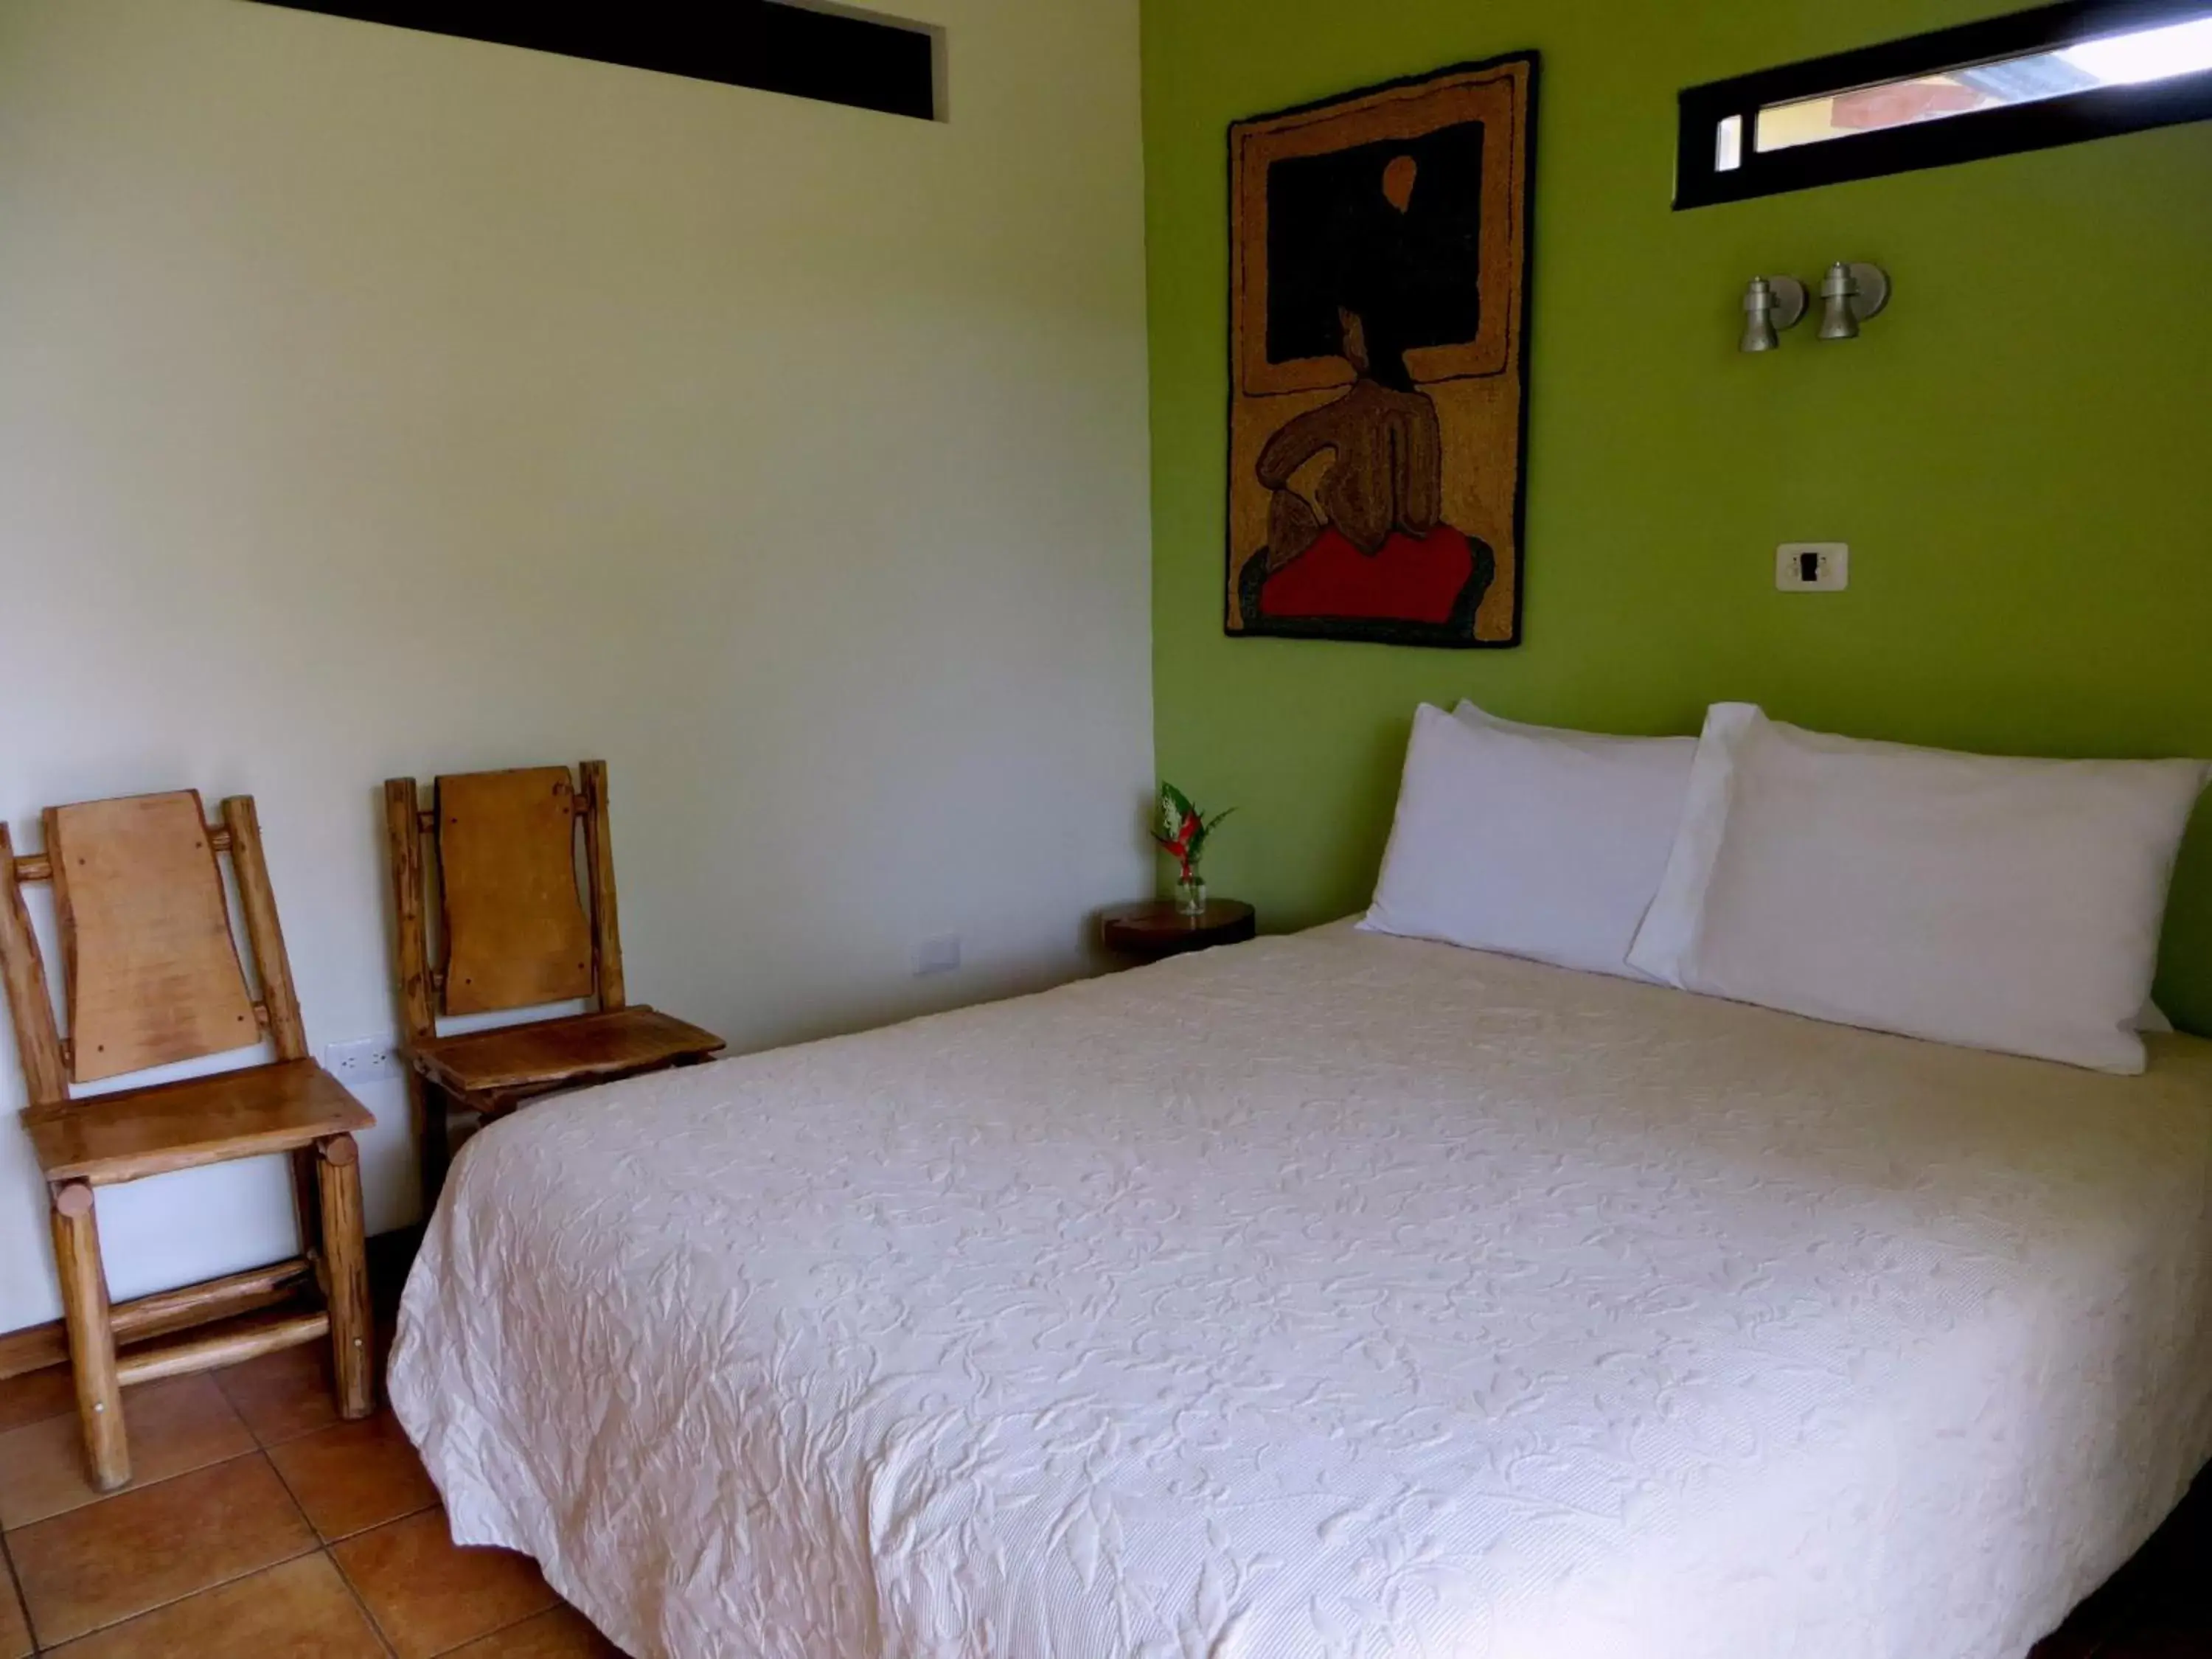 Bedroom, Bed in Pura Vida Hotel